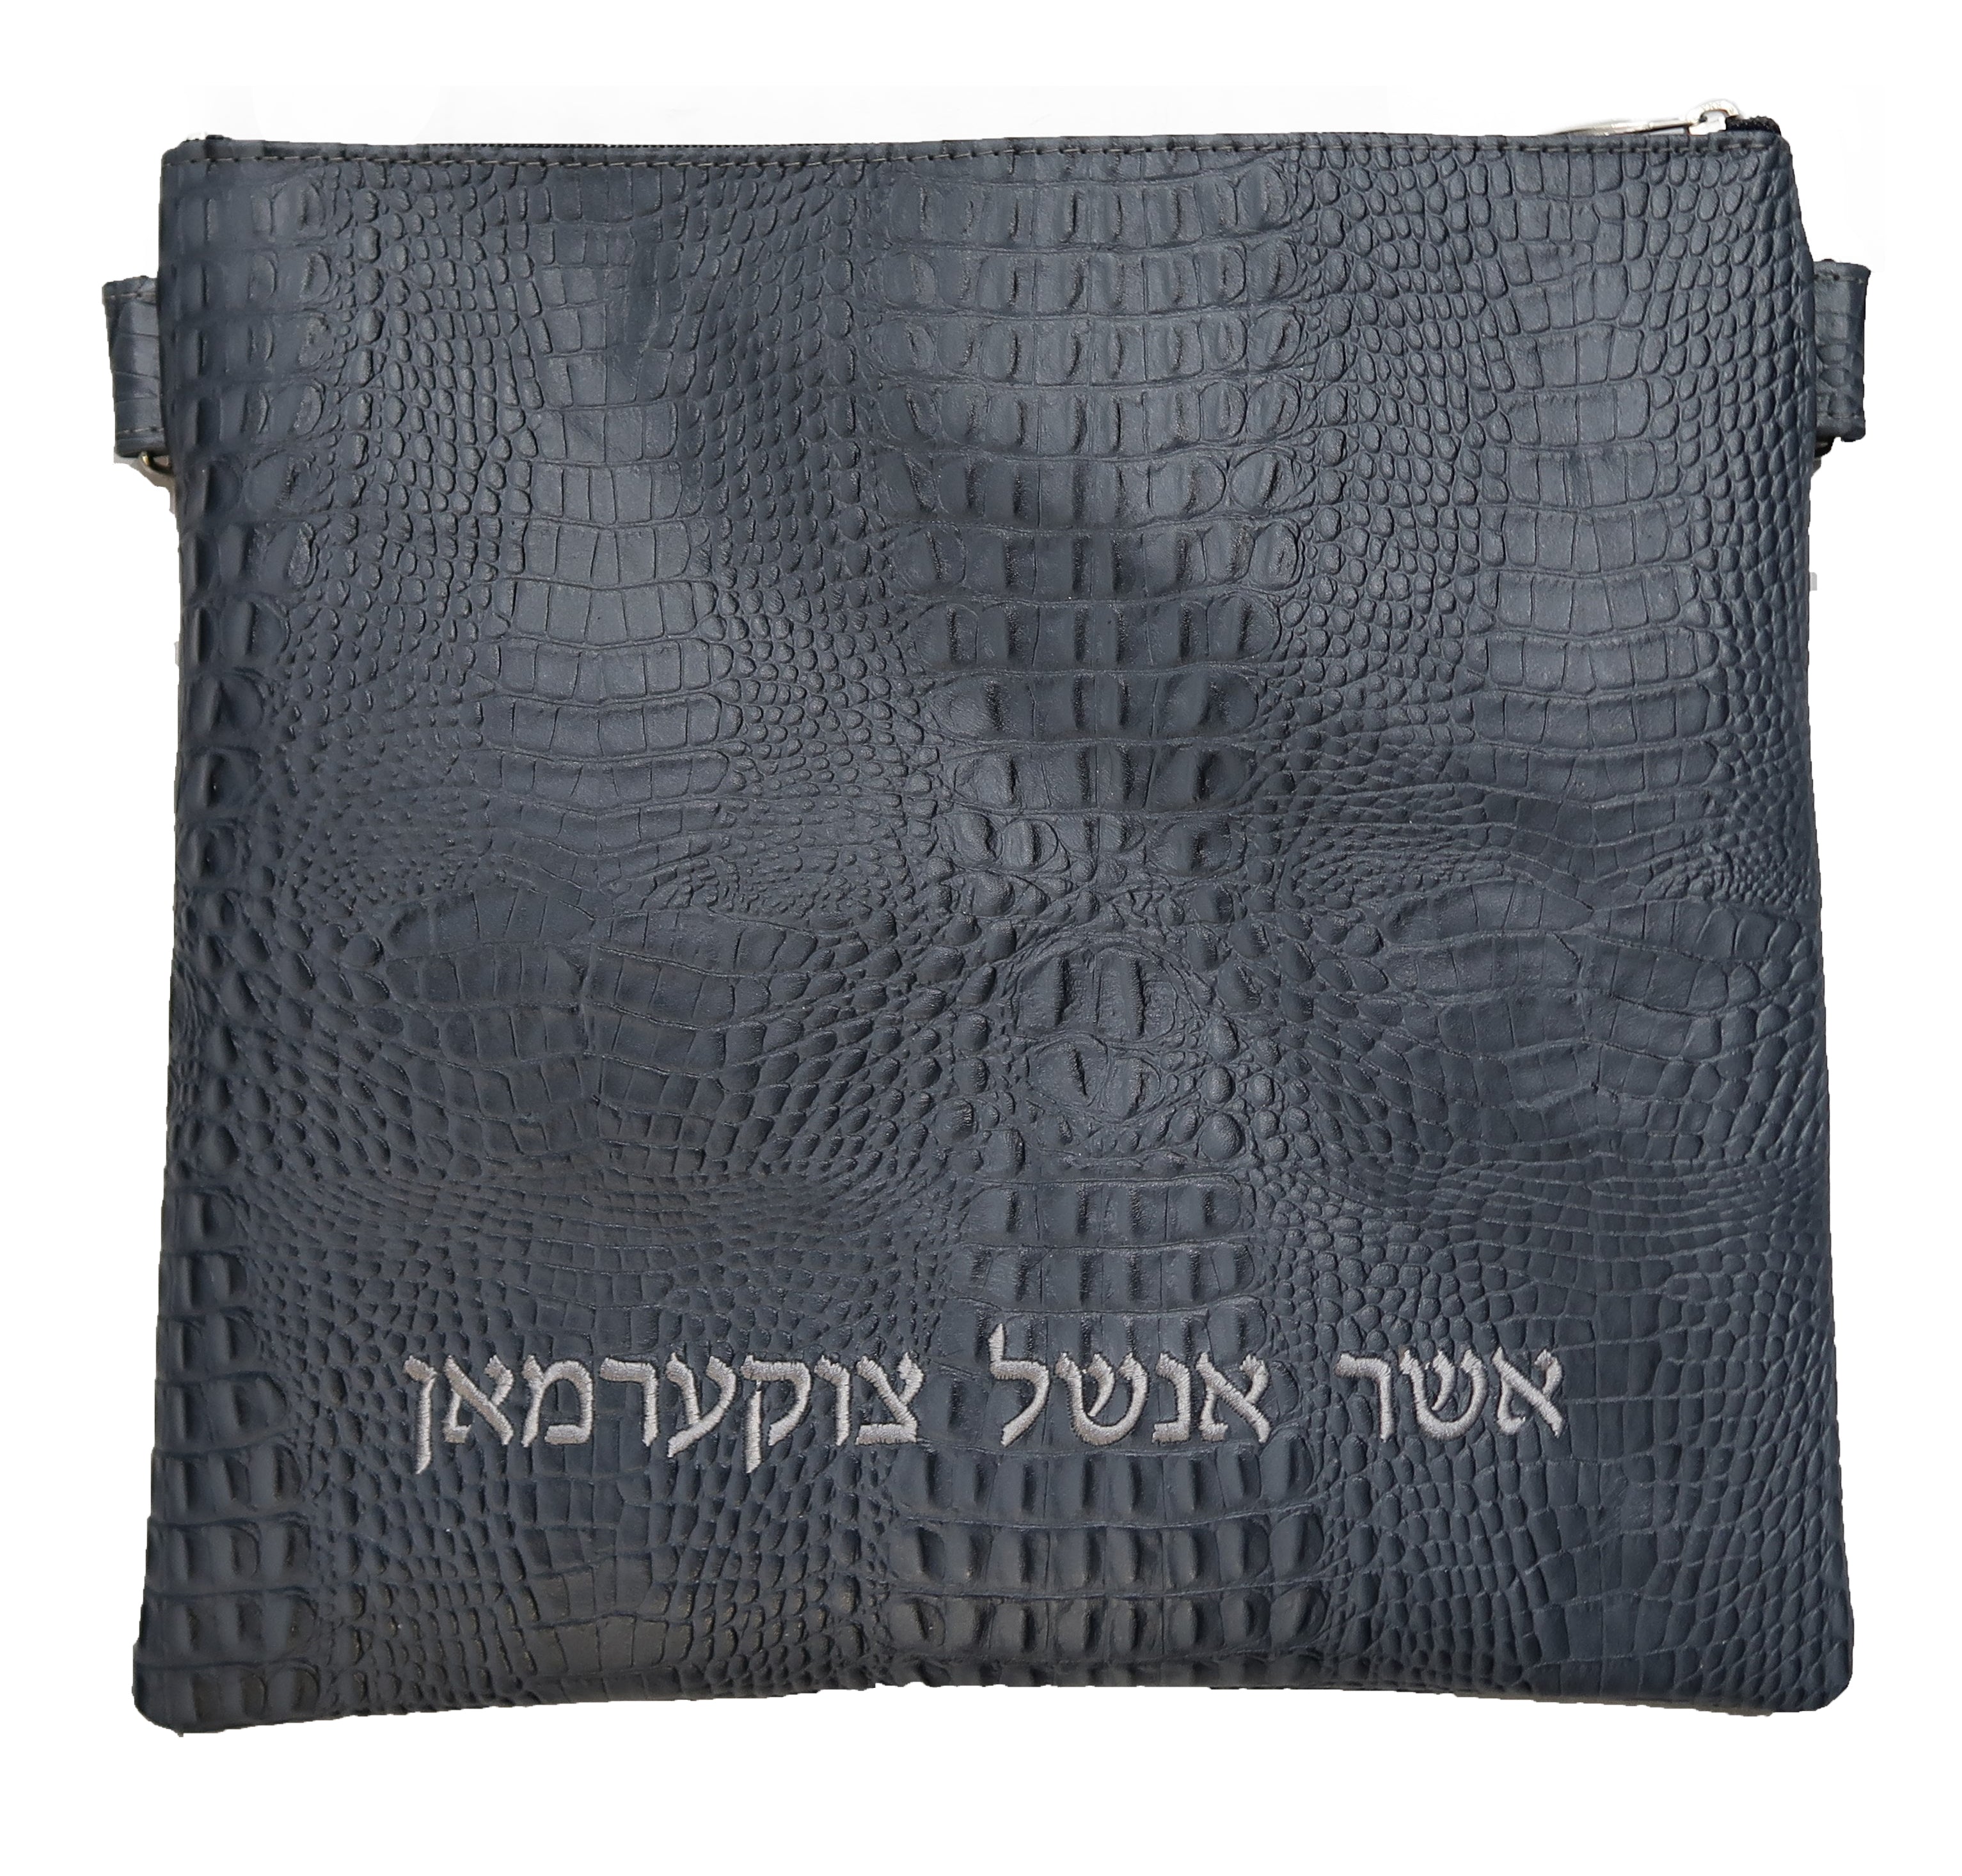 Classic Tallis and Tefillin bag with Smoke croc print leather